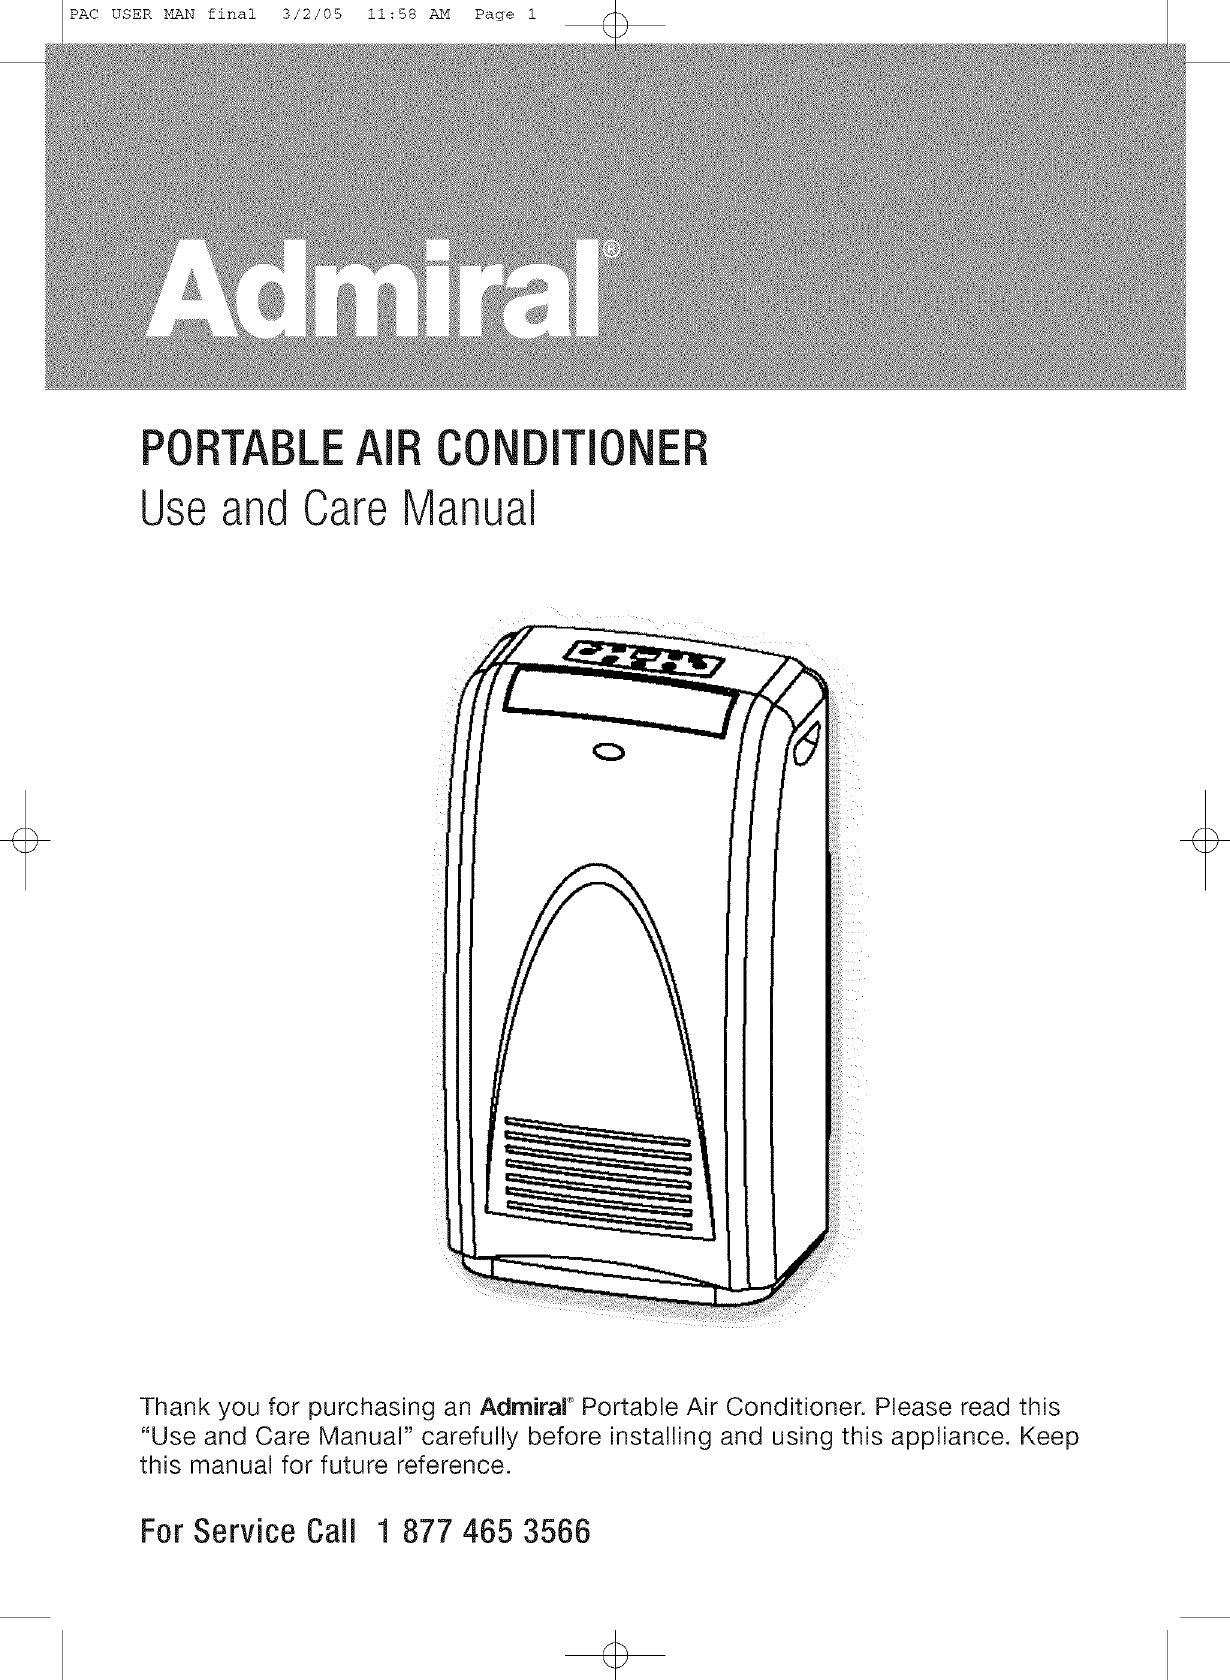 Admiral Kelon Air Conditioner Room 42 Manual L0802066